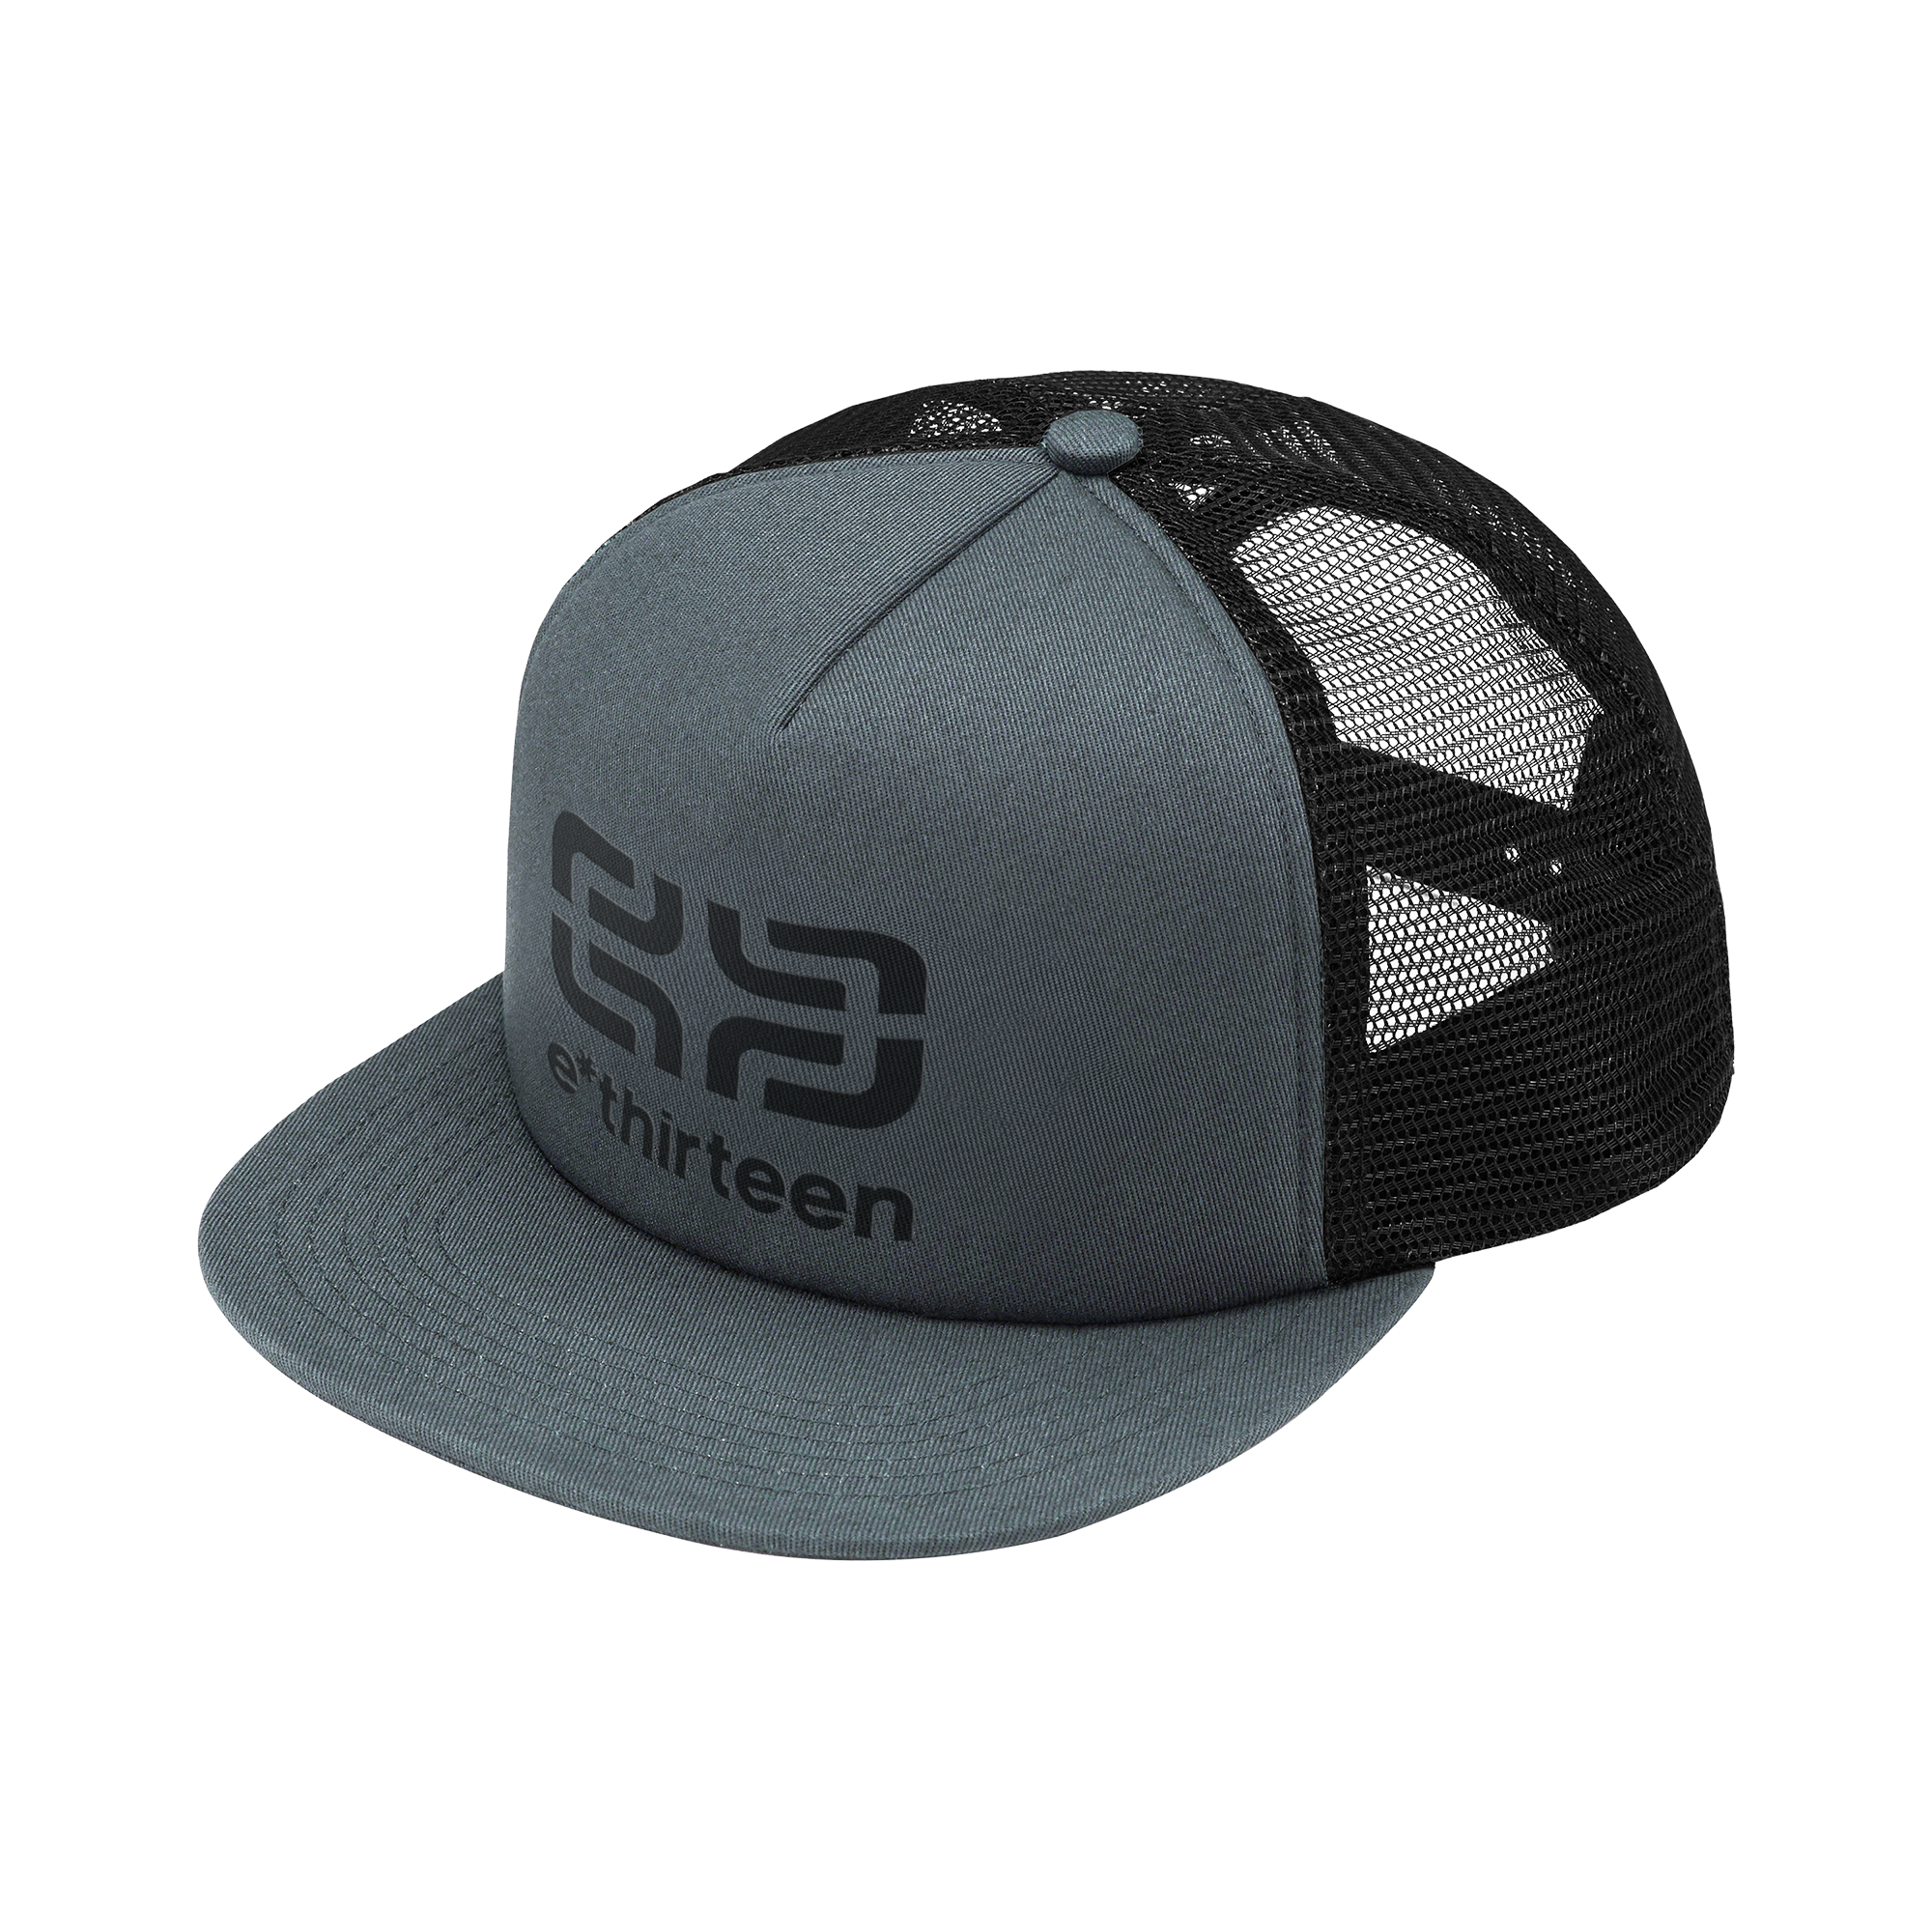 Logo Hat - Grey / Black